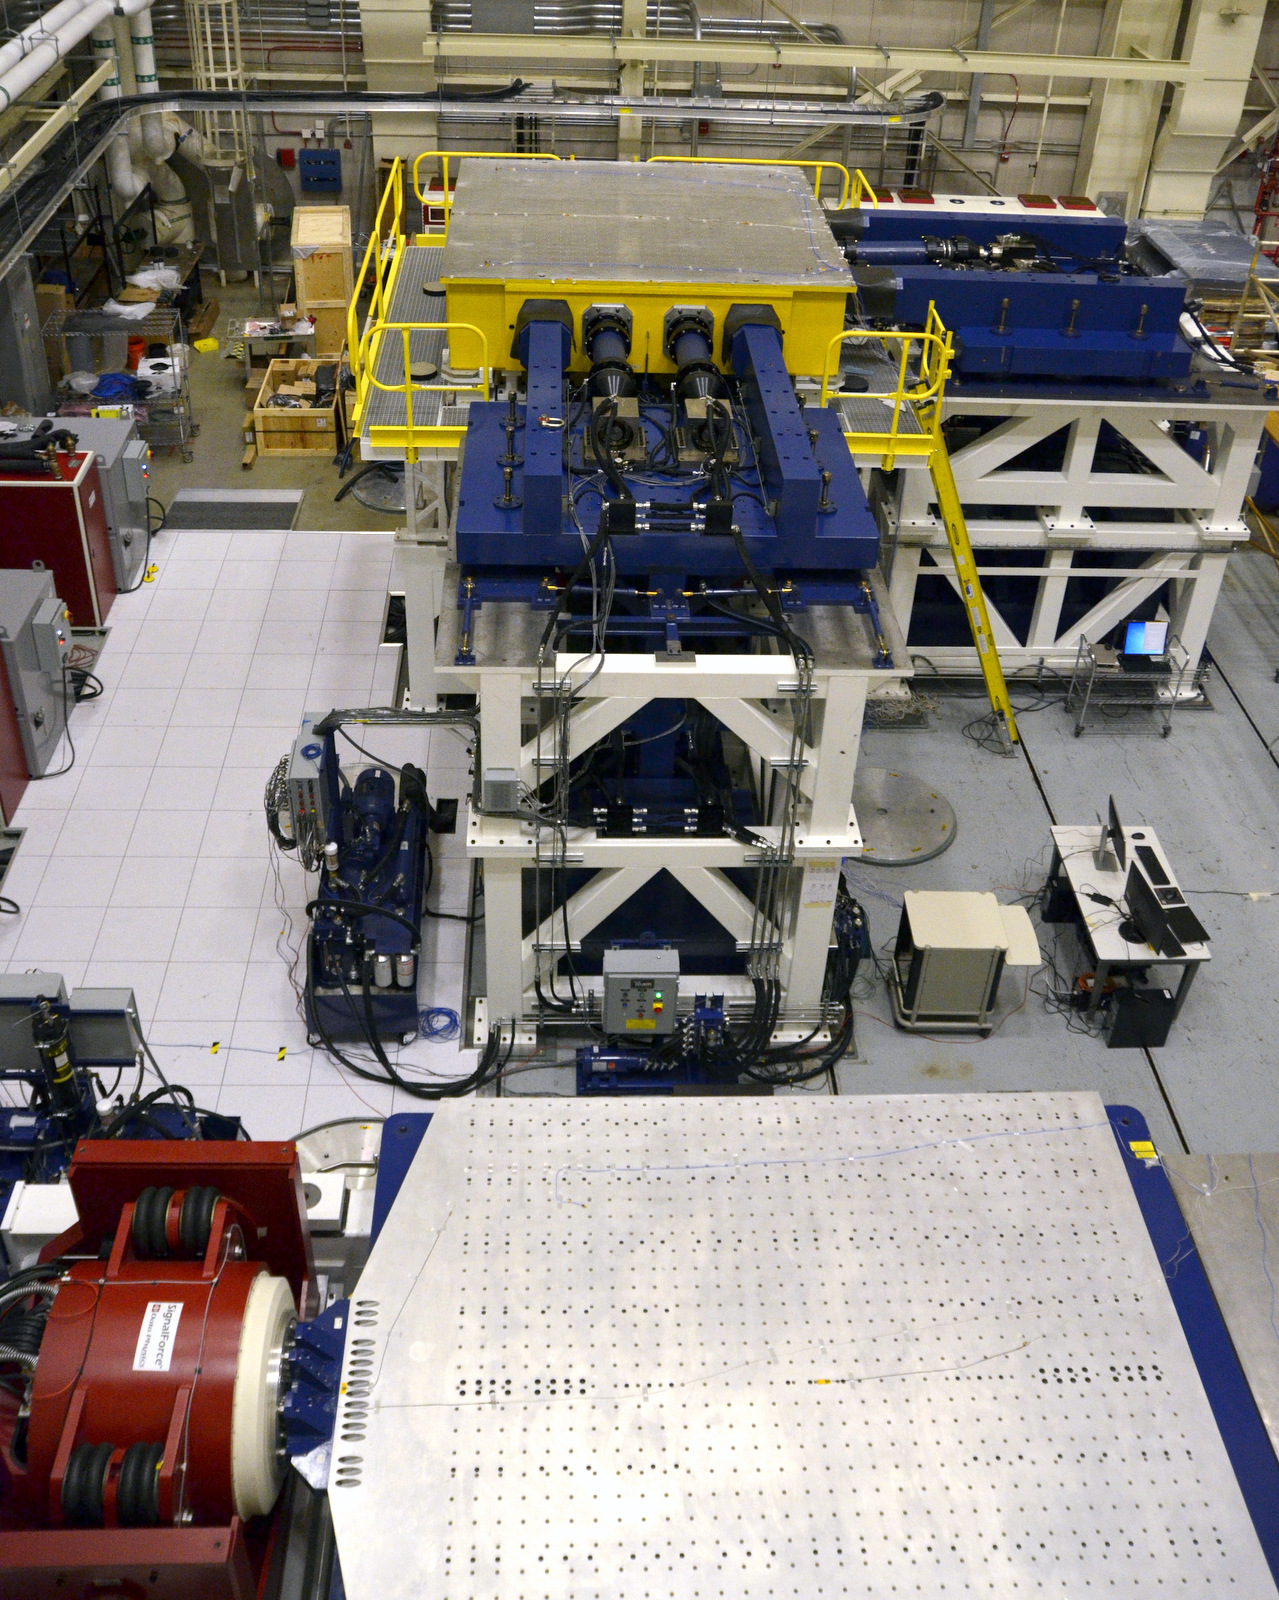 Vibration testing system at NASA's Goddard Space Flight Center.